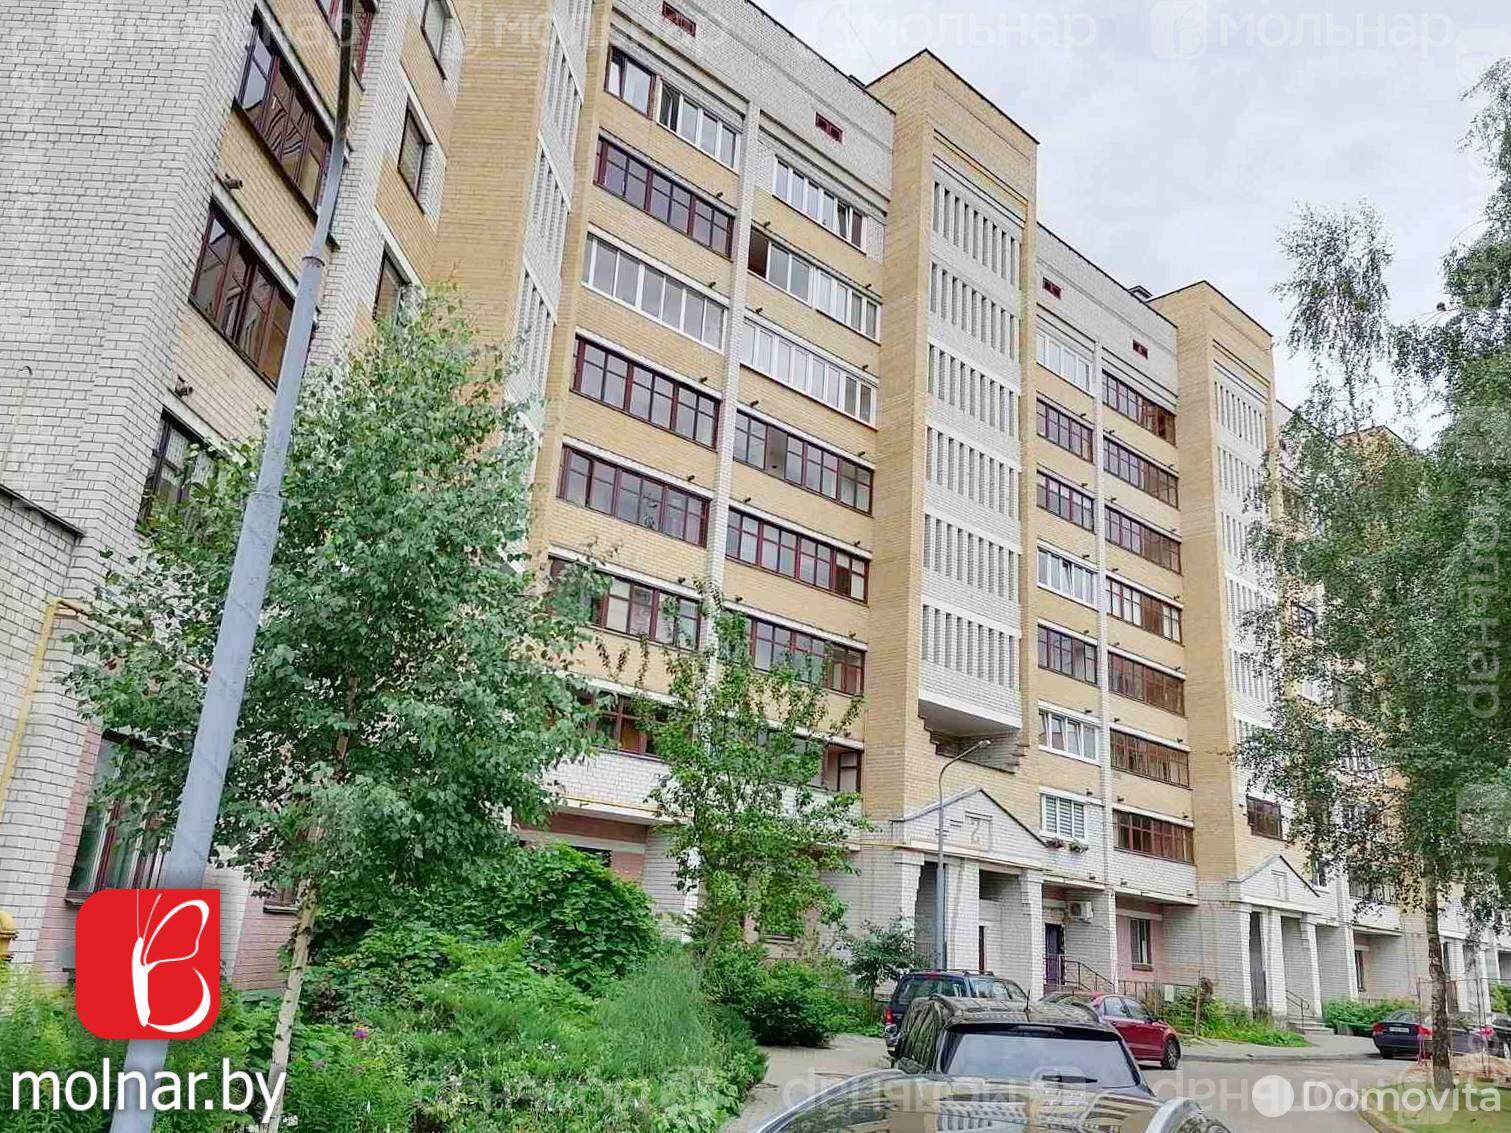 квартира, Гродно, ул. Славинского, д. 5, стоимость продажи 244 800 р.